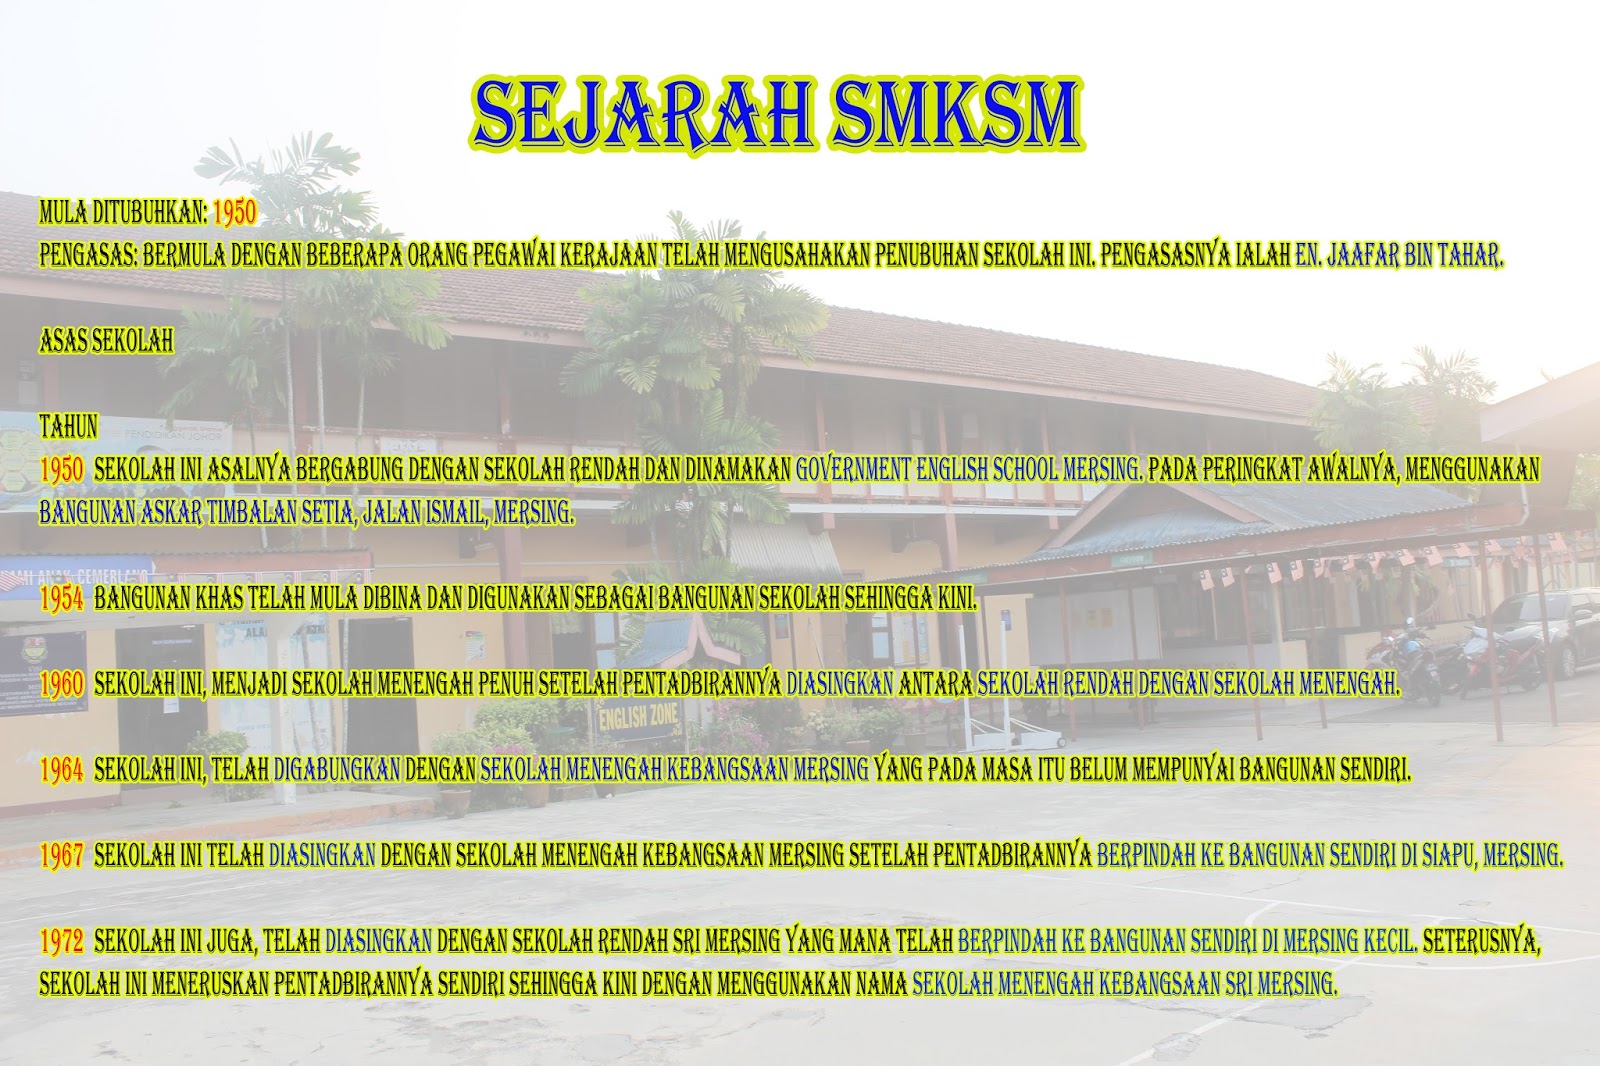 SMK SRI MERSING: SEJARAH SEKOLAH